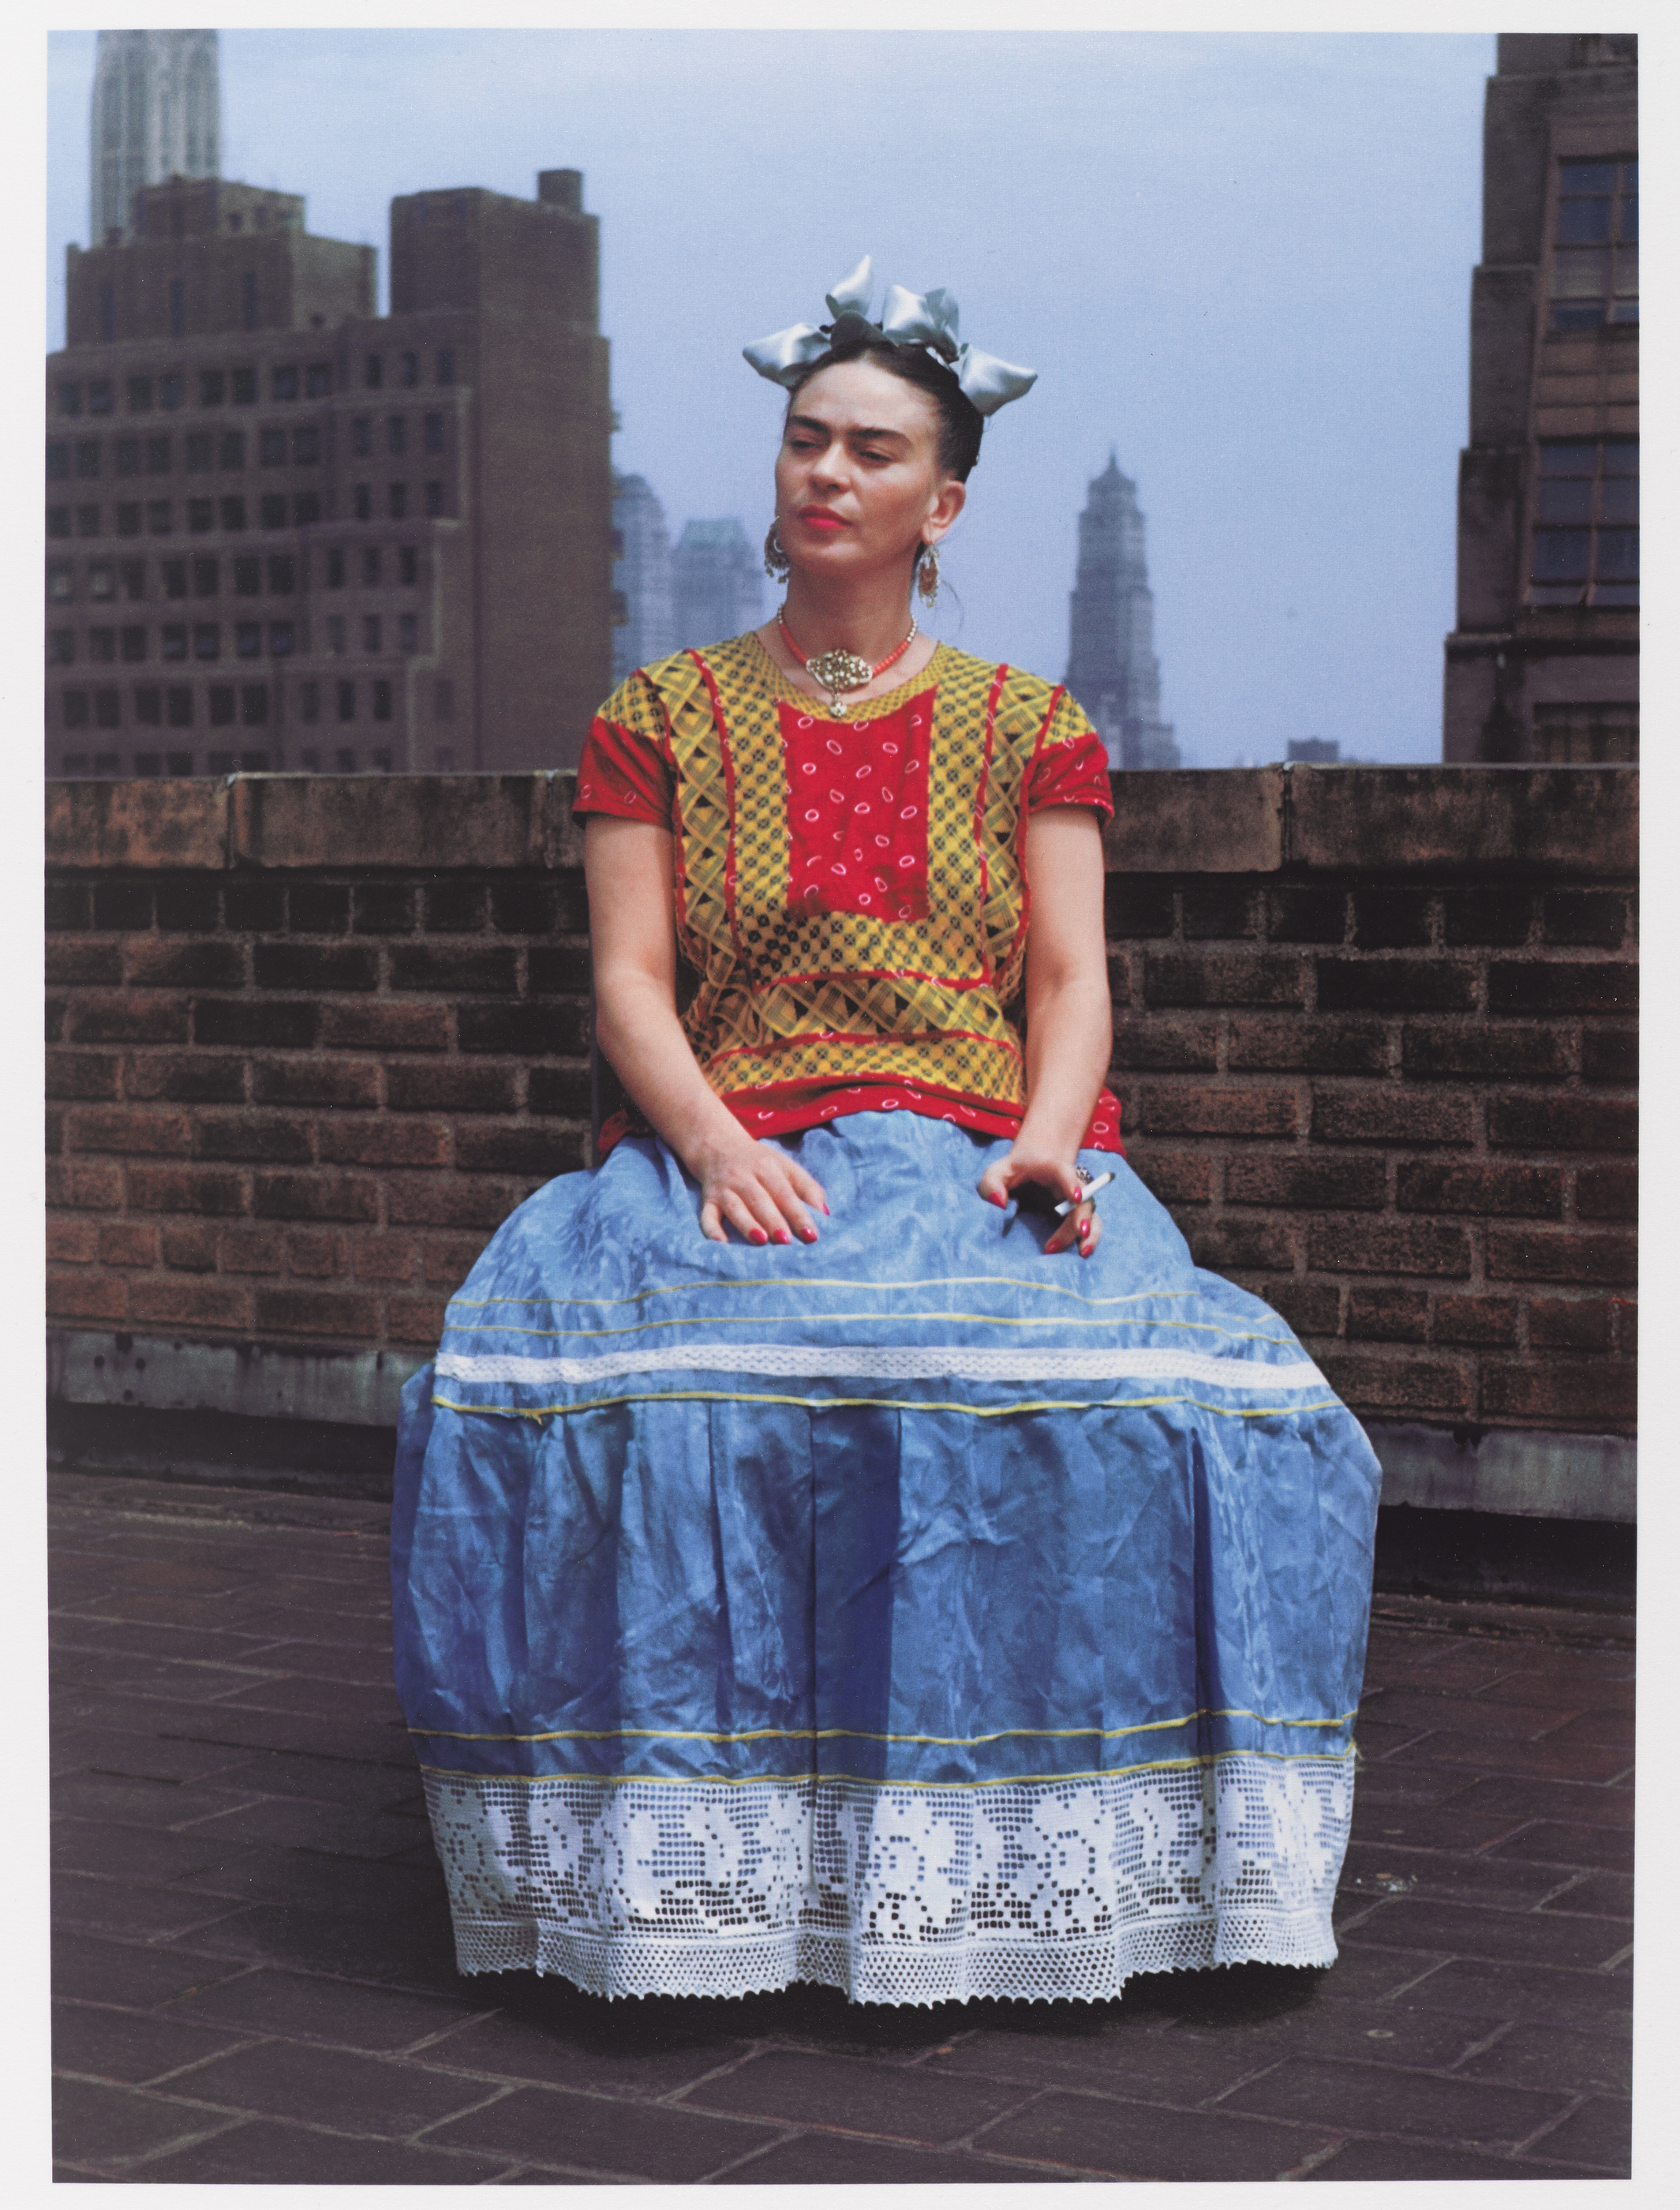 Nickolas Muray (American, born Hungary, 18921965). Frida in New York, 1946? printed 2006. Carbon pigment print, image: 14 x 11 in. (35.6 x 27.9 cm). Brooklyn Museum? Emily Winthrop Miles Fund, 2010.80. Photo by Nickolas Muray, © Nickolas Muray Photo Archive. (Photo: Brooklyn Museum)